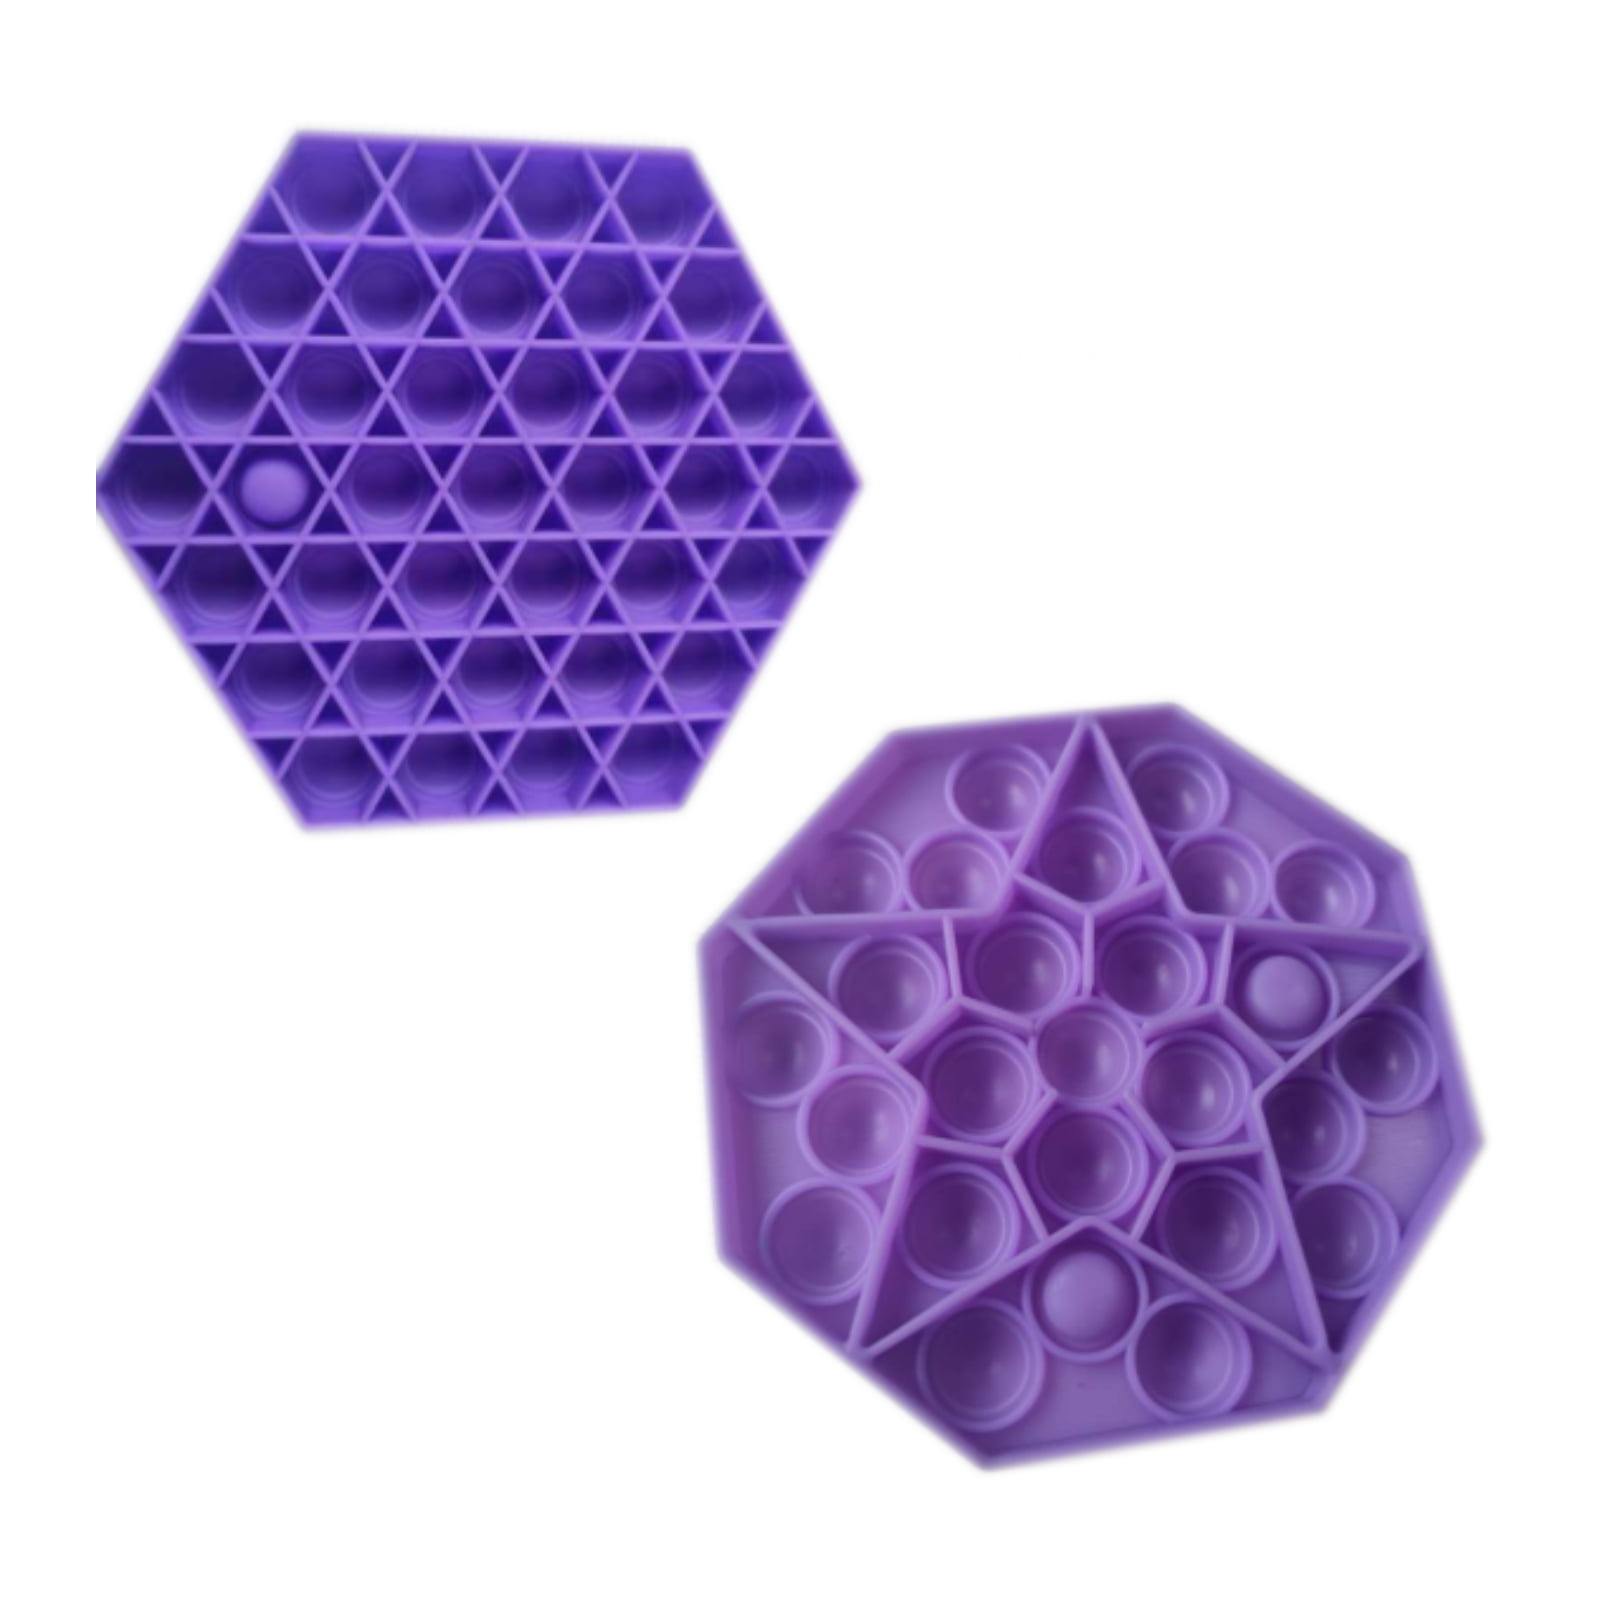 Hexagon Push Pop Bubble Sensory Fidget Special Needs Kids Toy Autism 